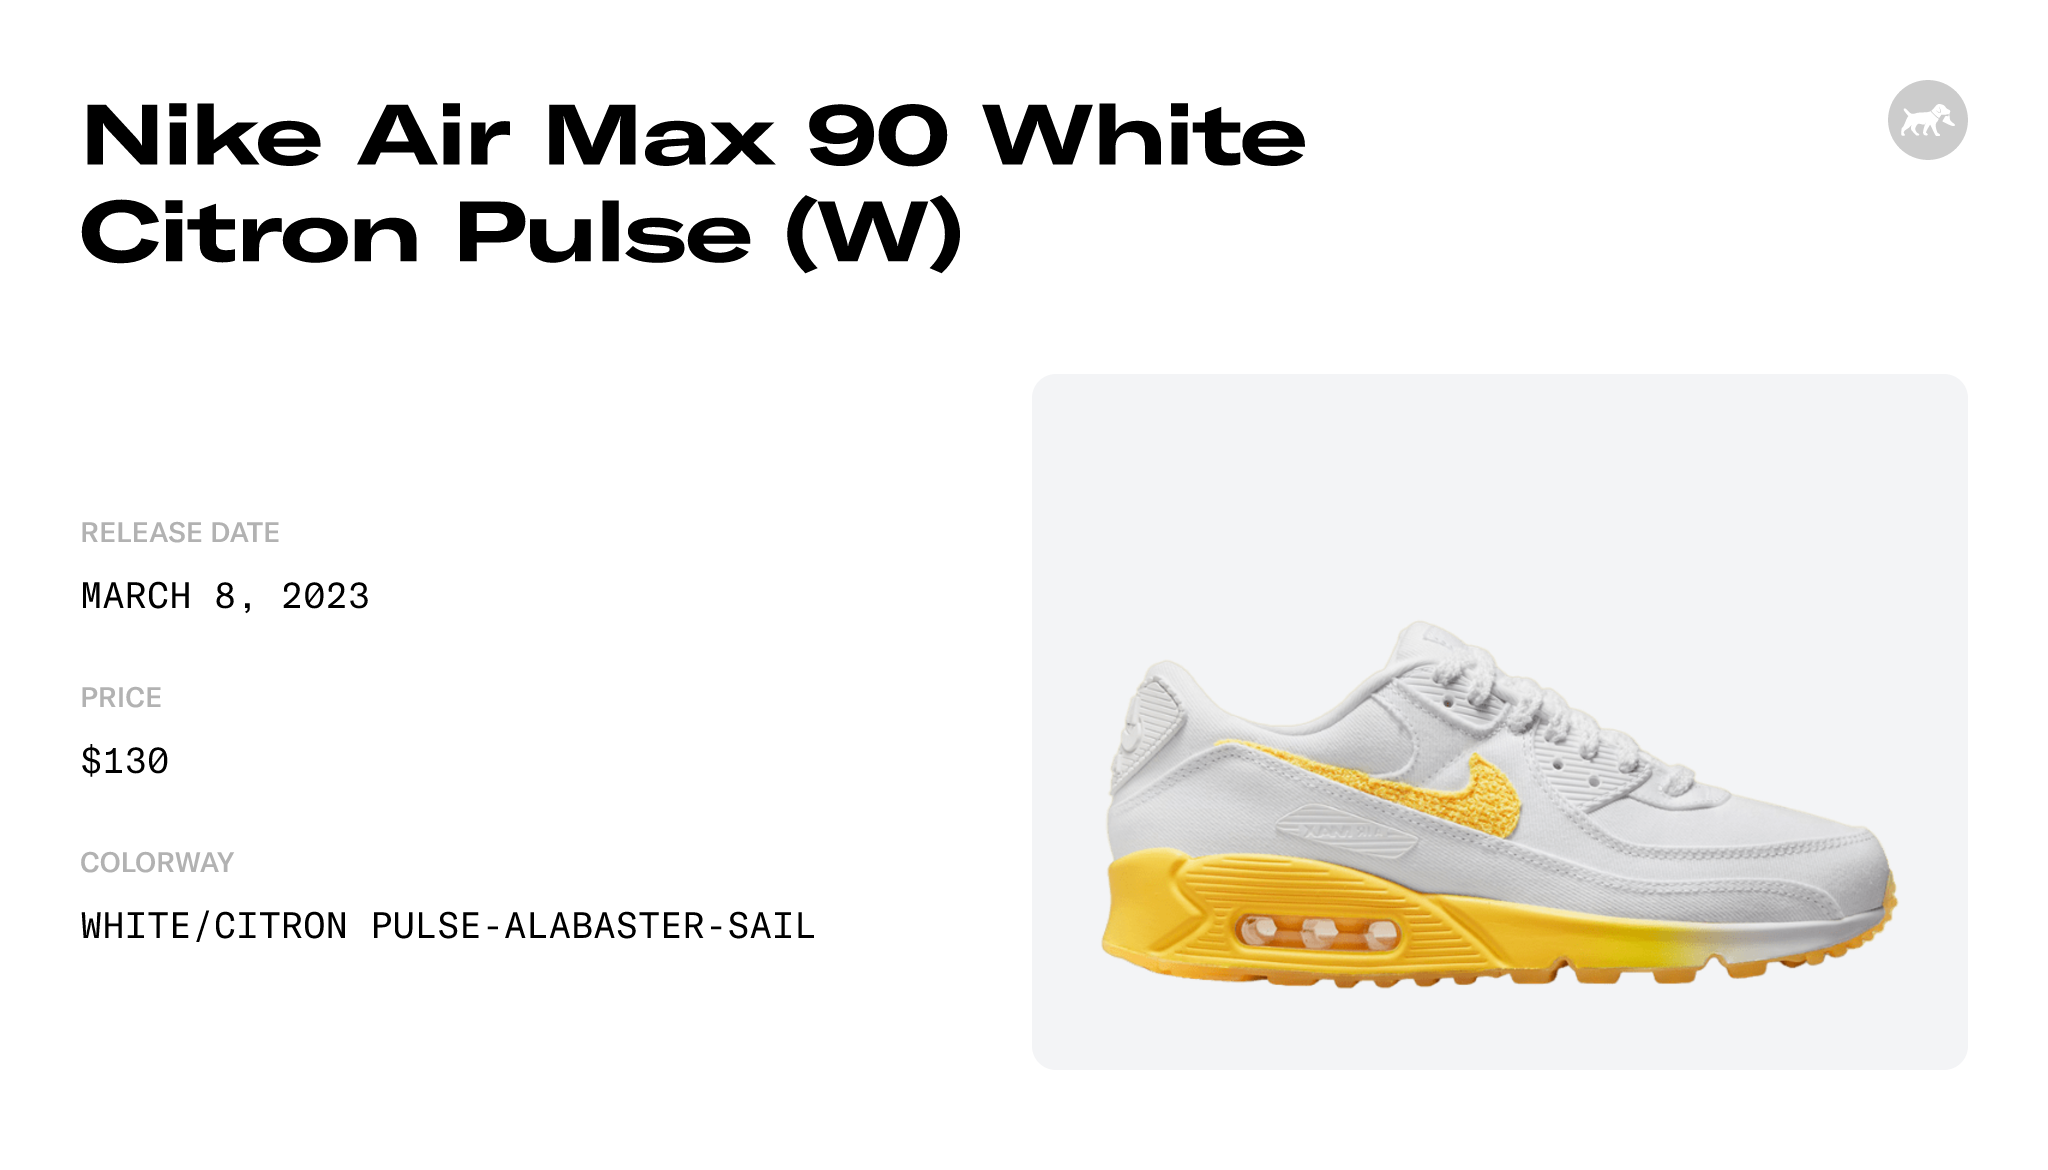 Nike Air Max 90 SE White / Alabaster / Sail / Citron Pulse - FJ4548-100